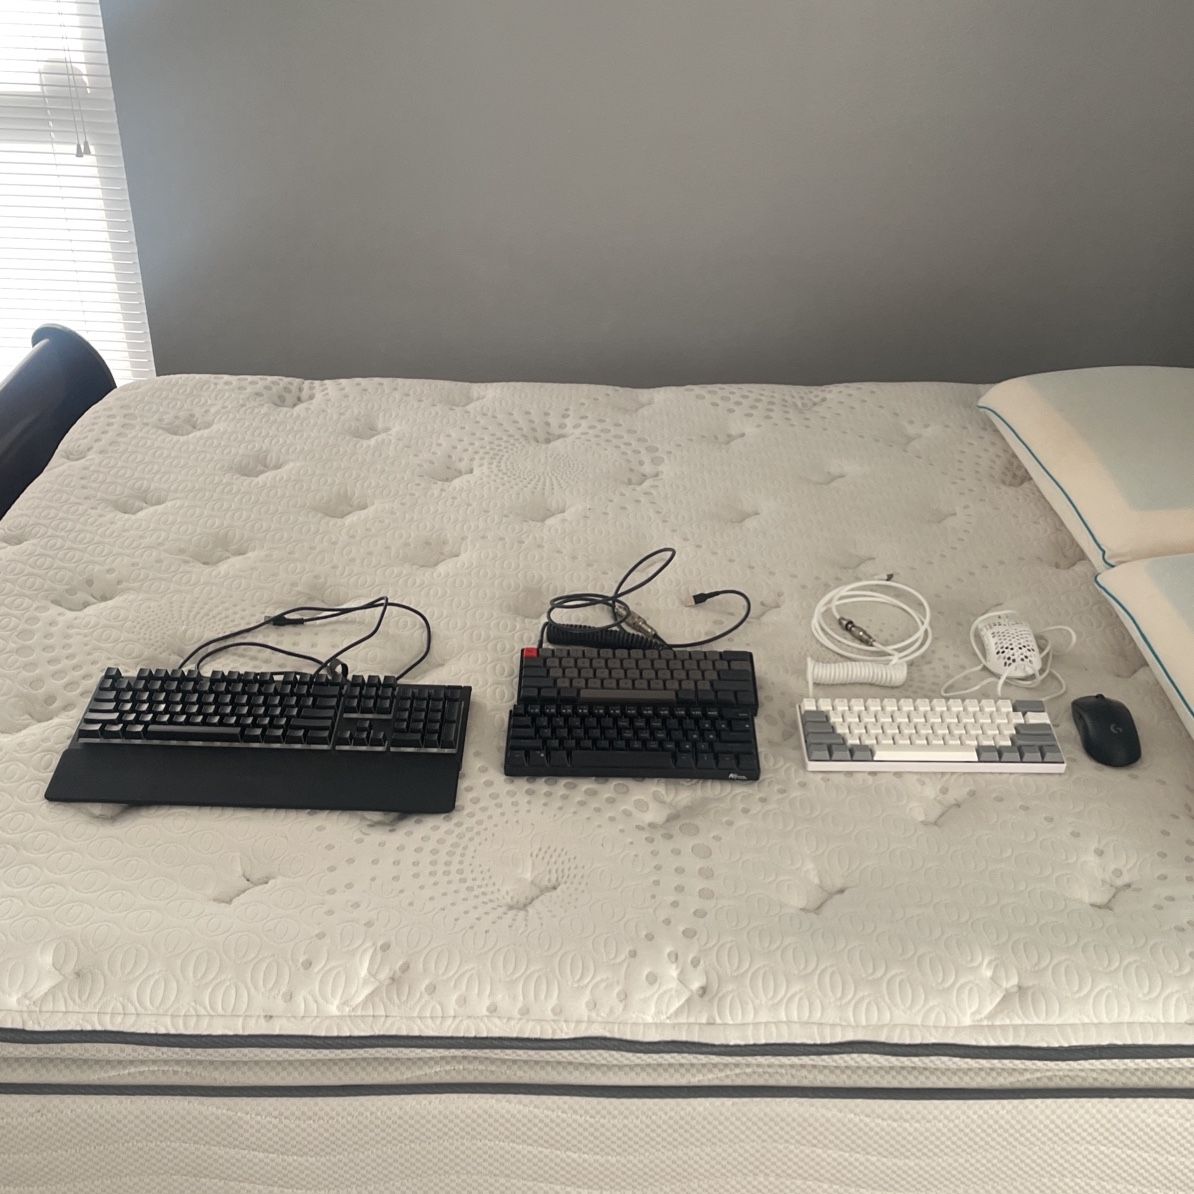 Keyboards & Wireless Mouse